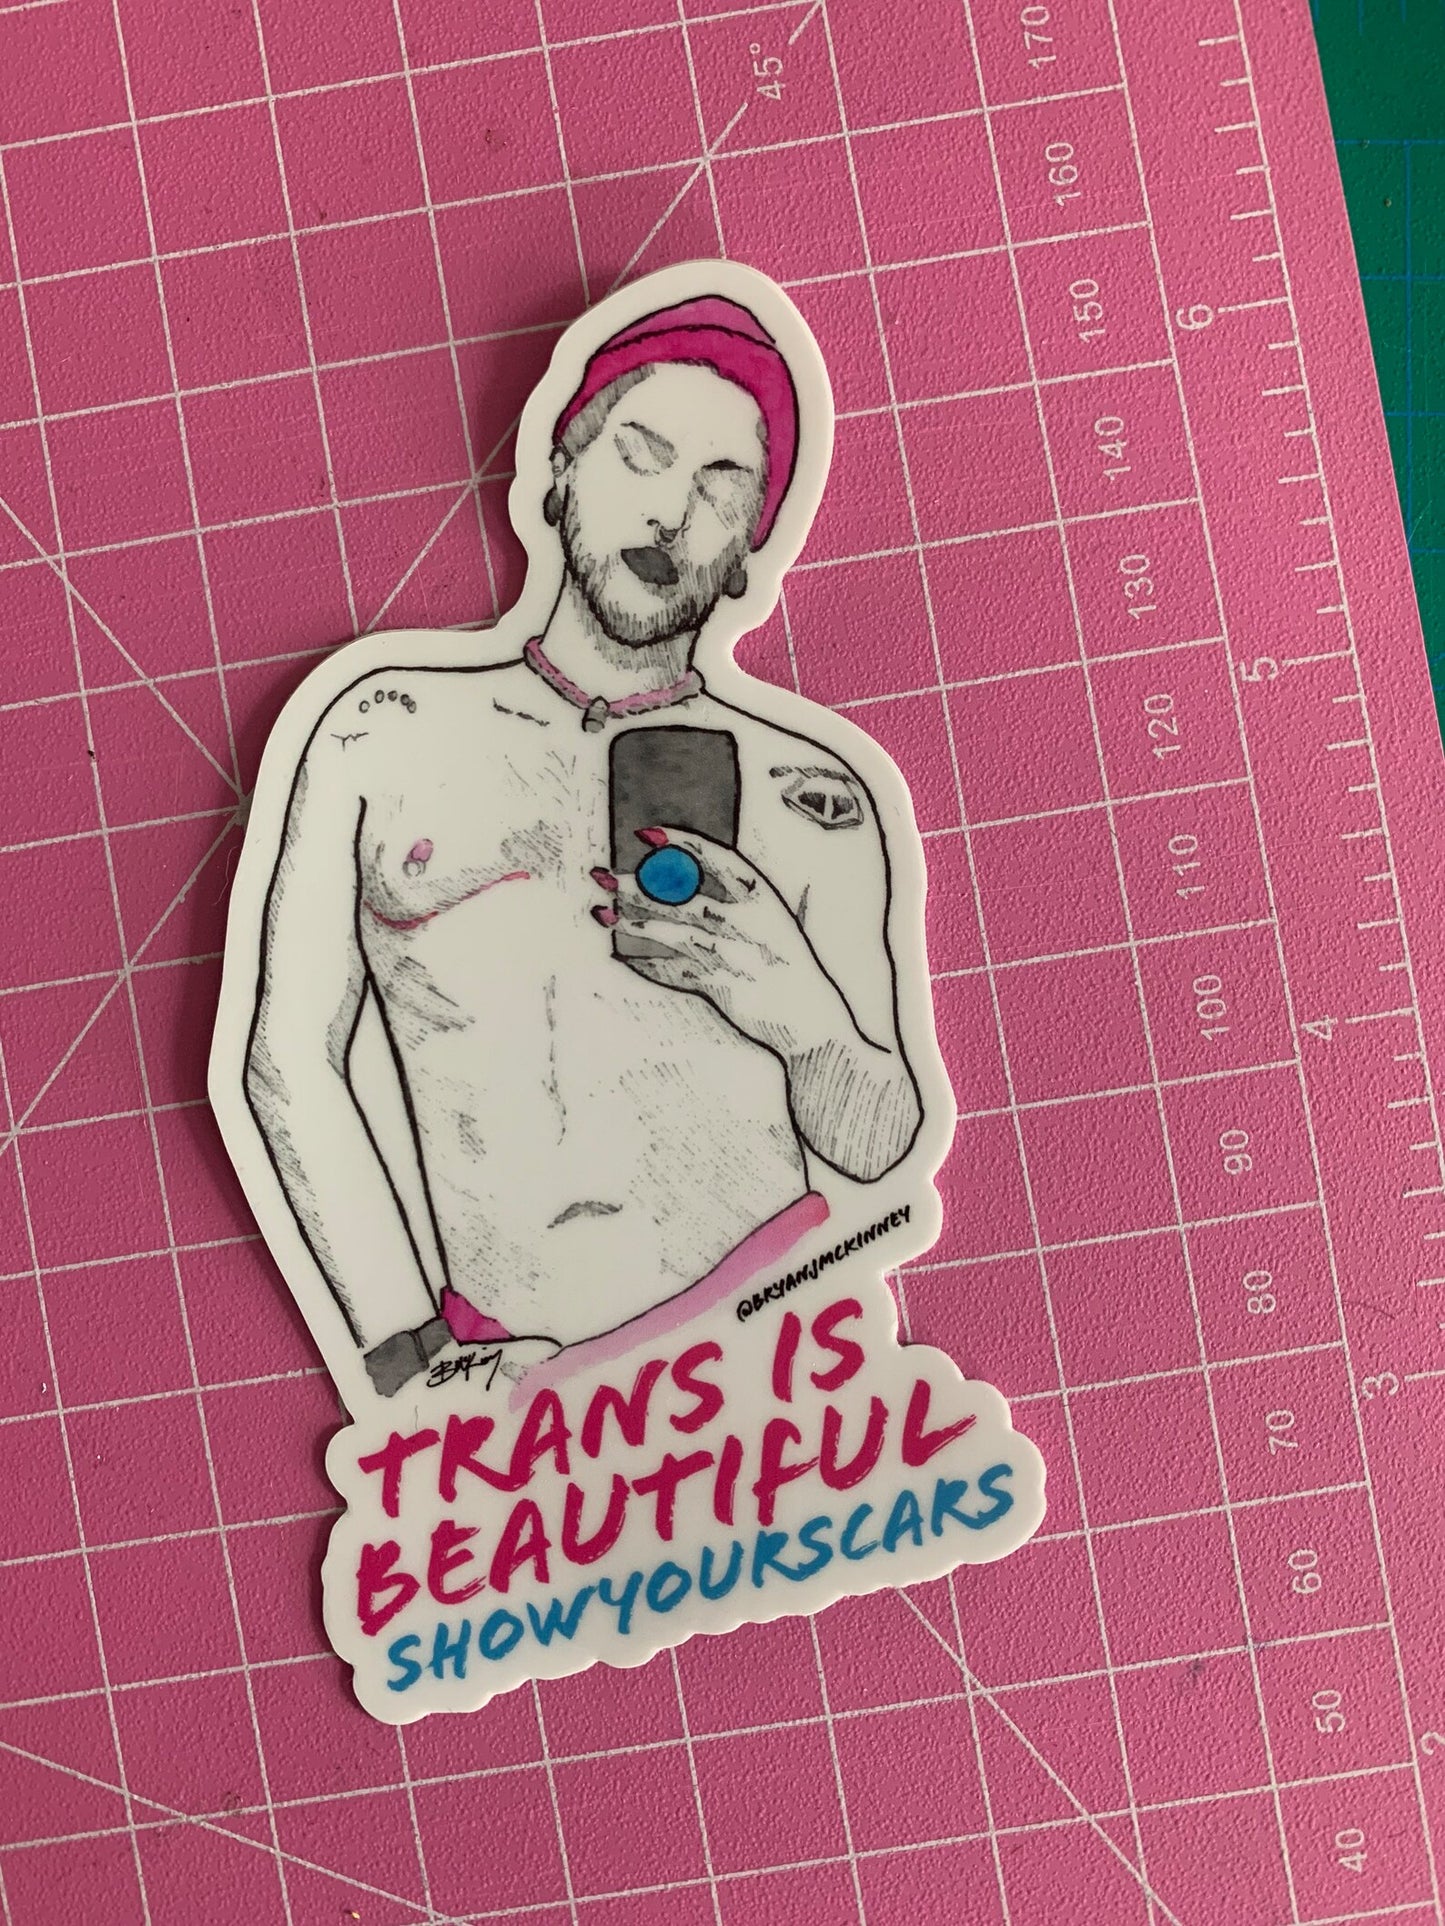 Trans Boys Are Beautiful STICKERS Bryan McKinney